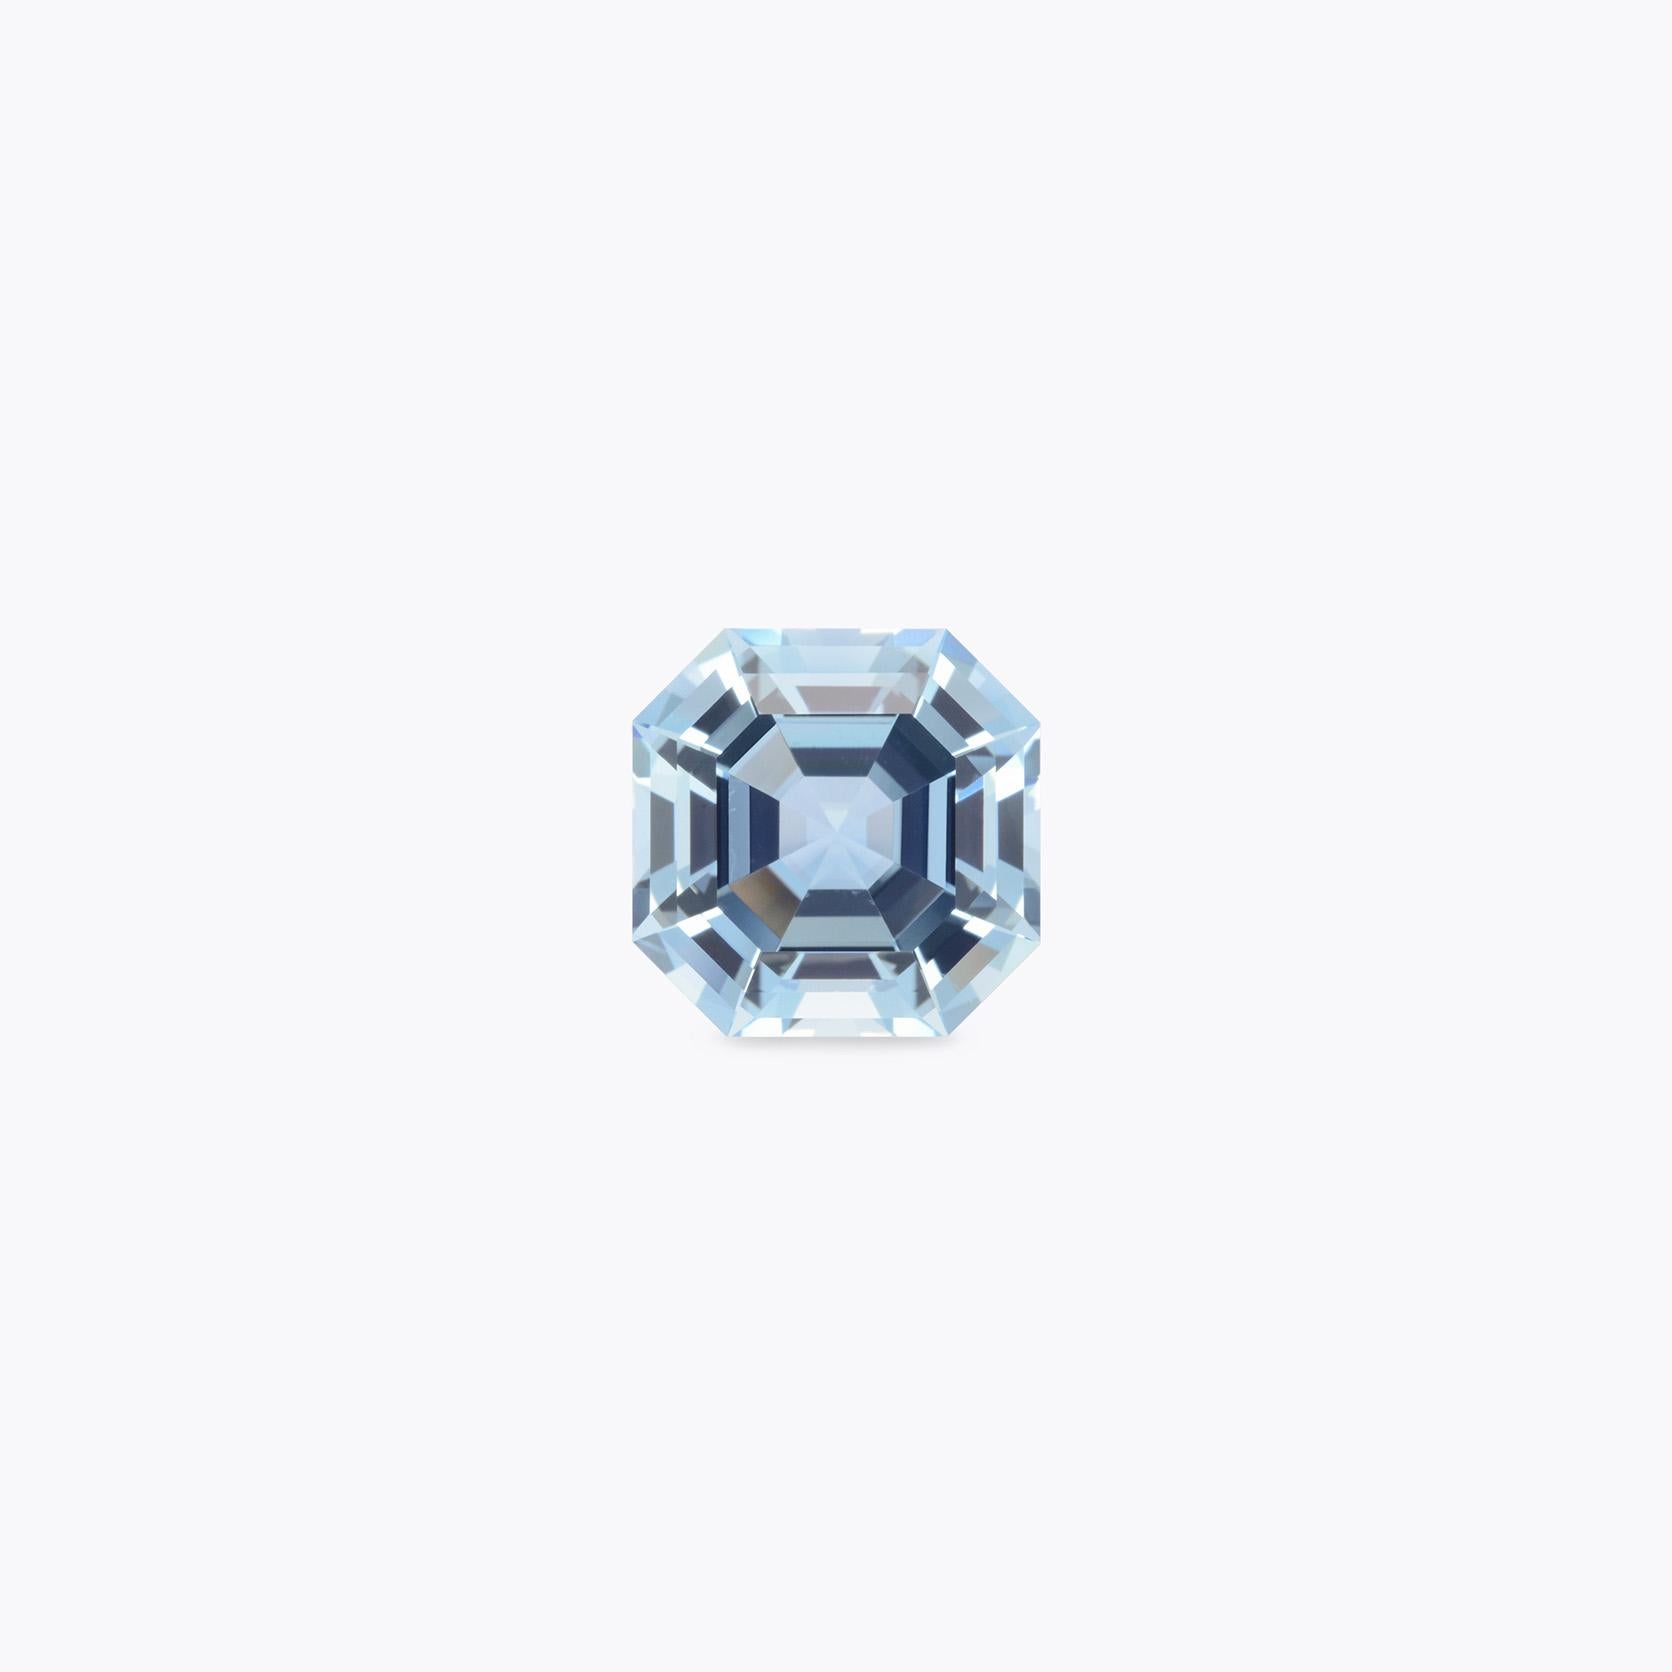 square octagonal shape gemstone jewelry